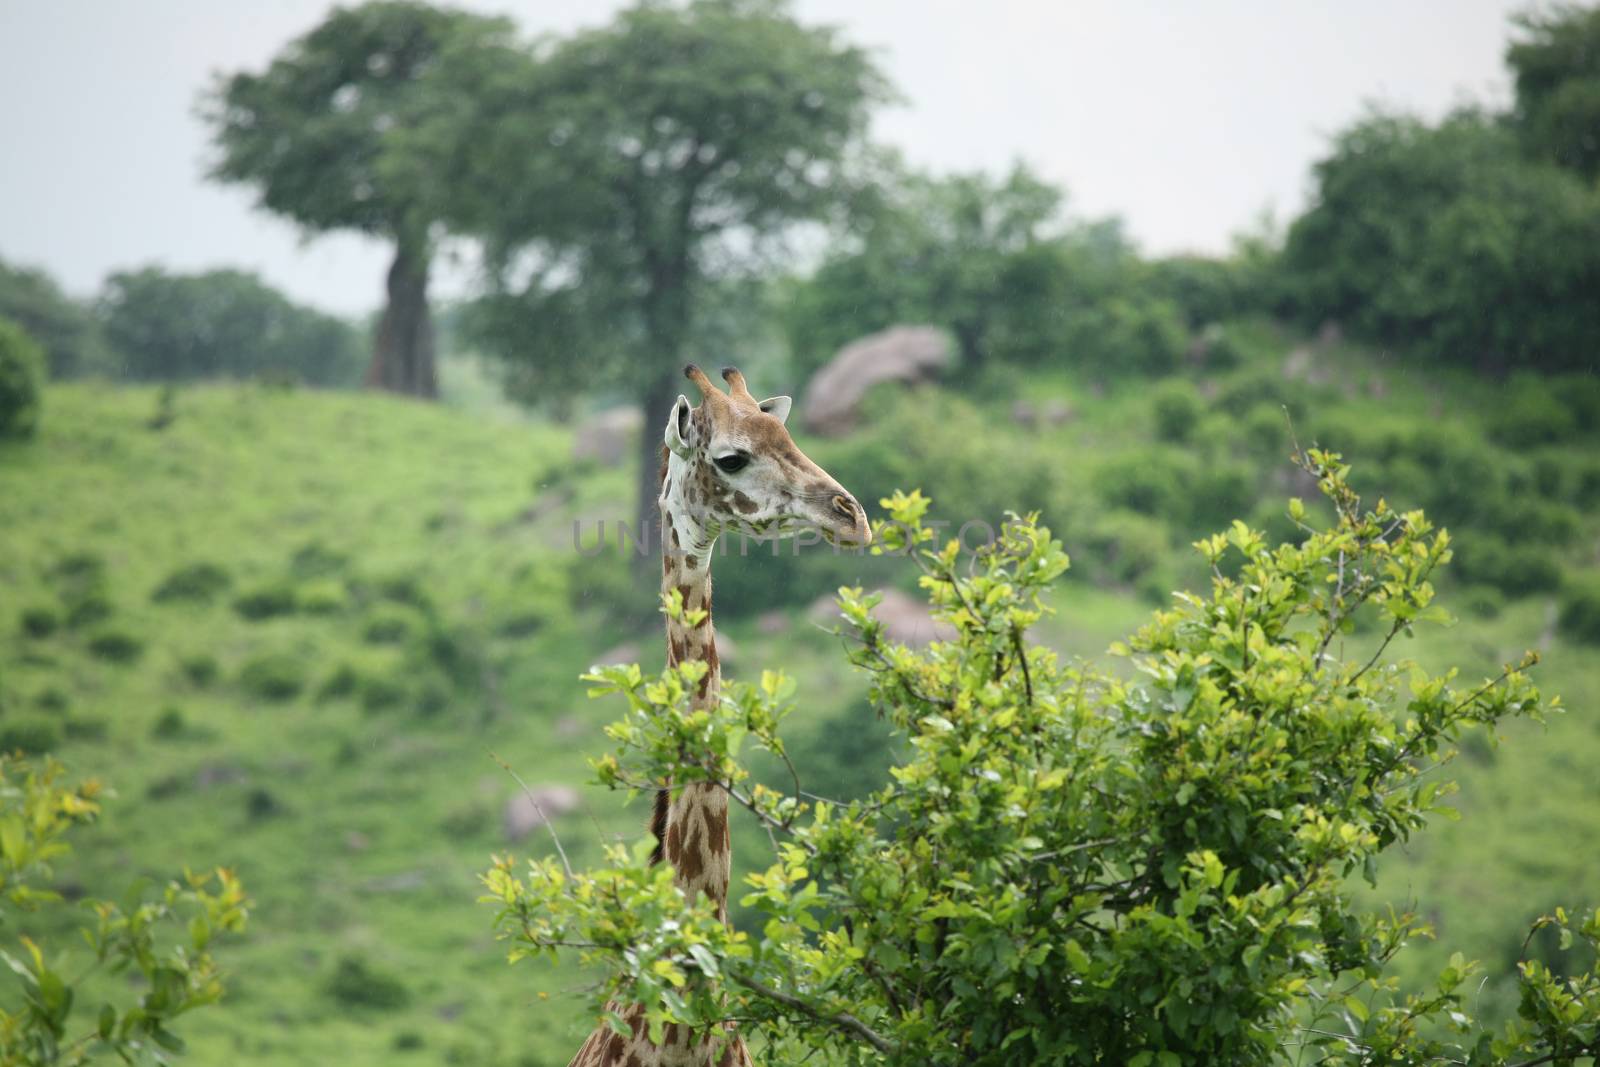 Wild Giraffe mammal africa savannah Kenya (Giraffa camelopardalis) by desant7474